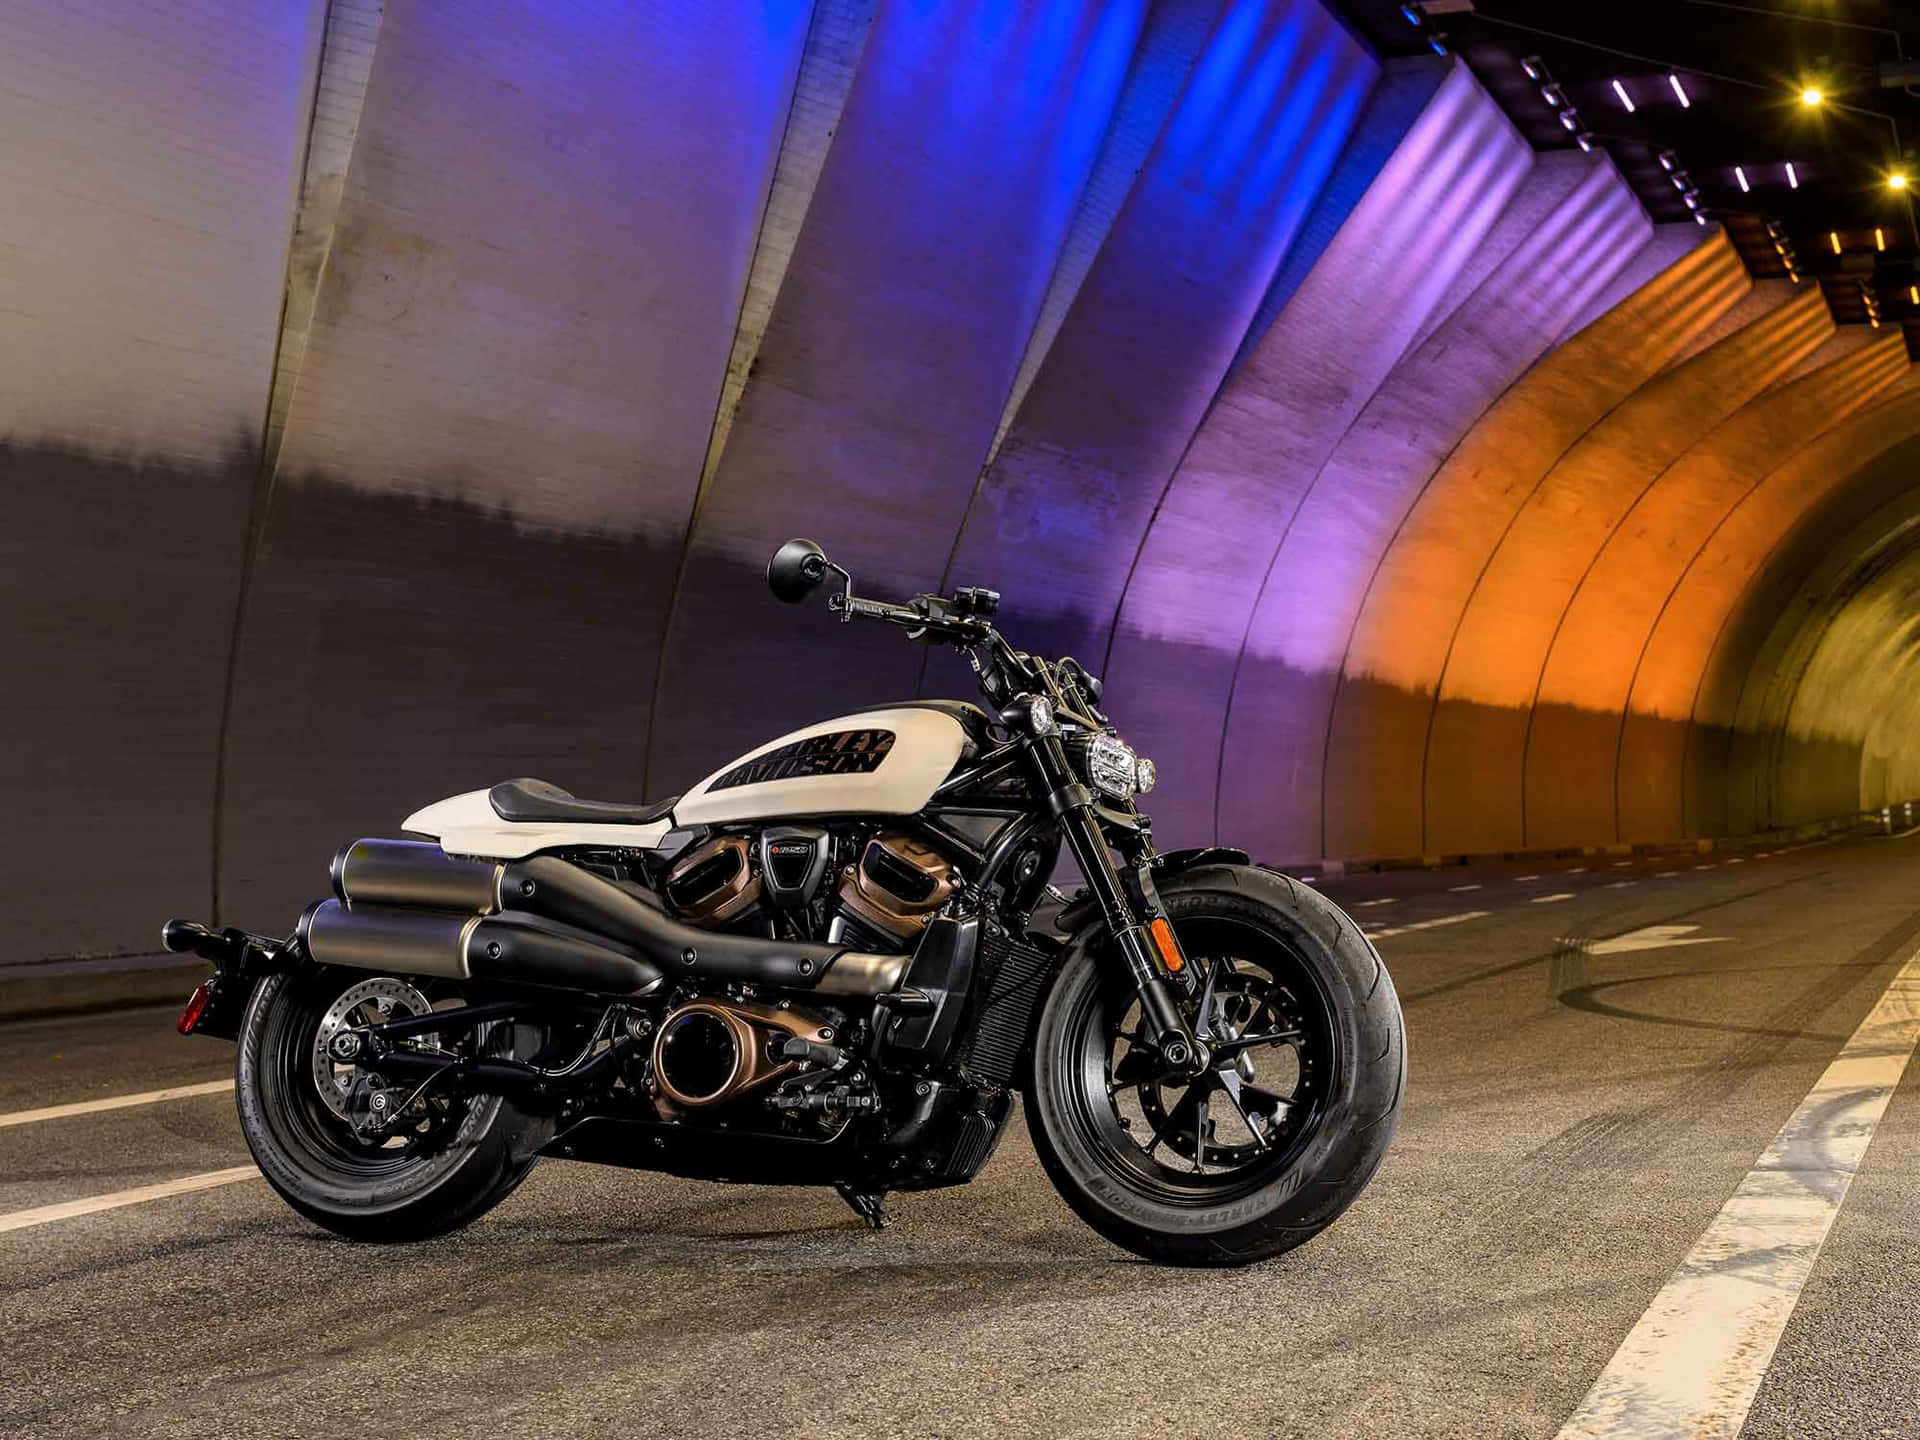 Enjoy the Powerful Roar of Your Harley-Davidson